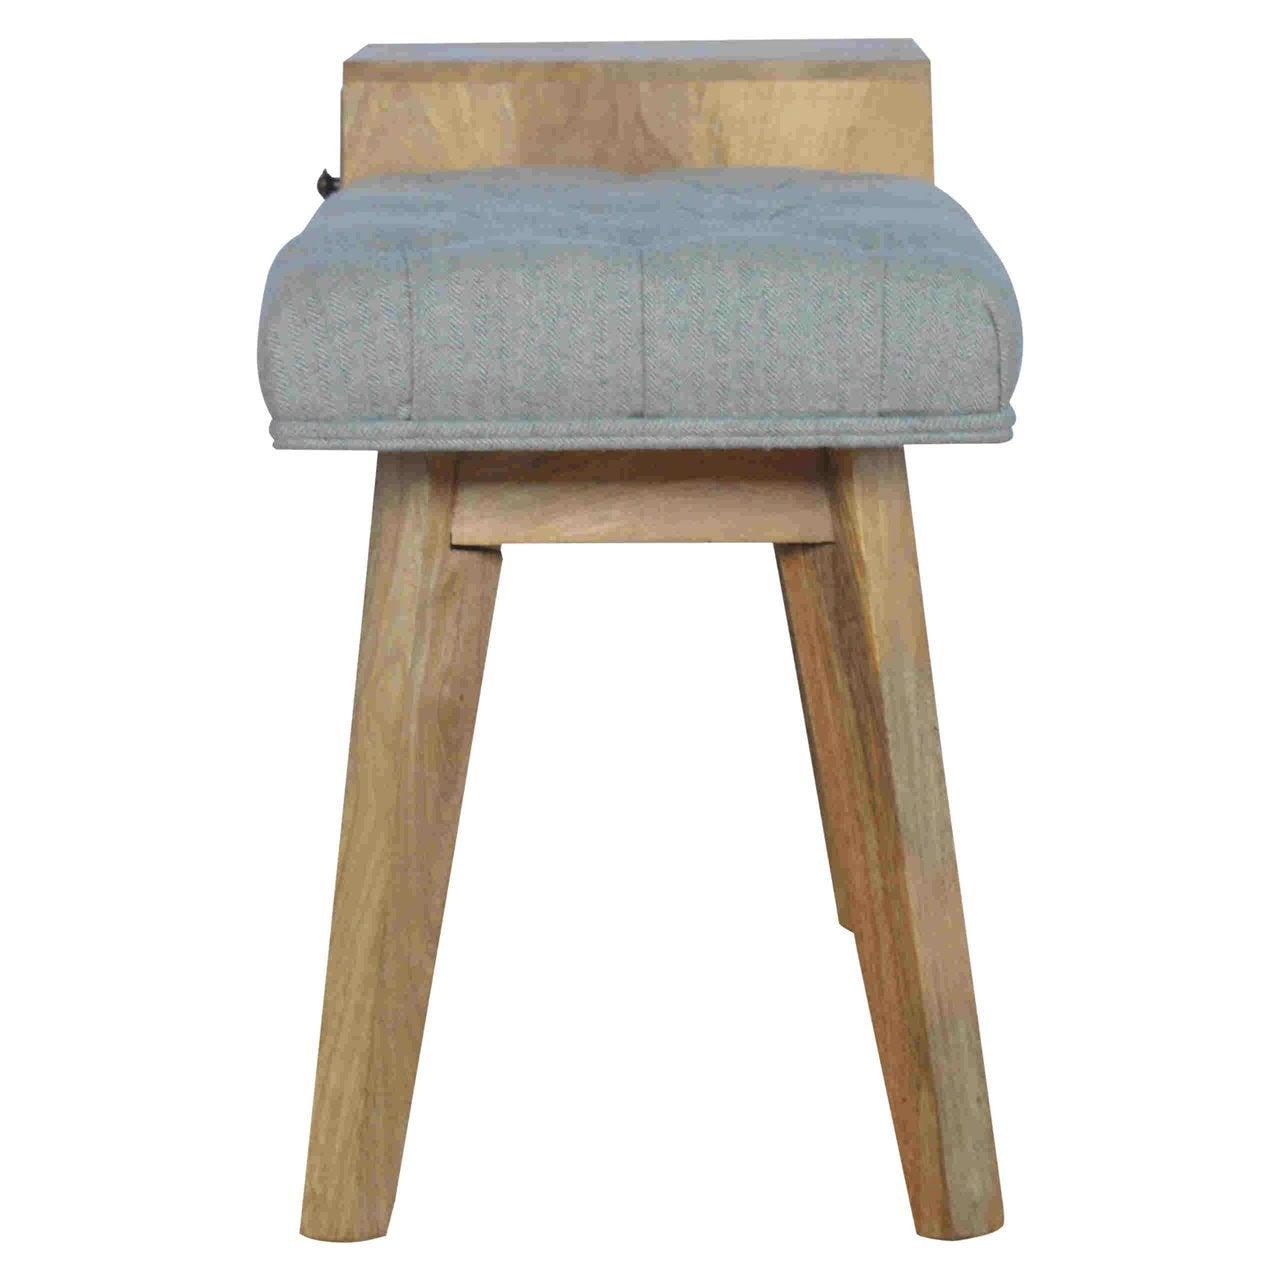 Grey tweed bench with 1 drawer - crimblefest furniture - image 10